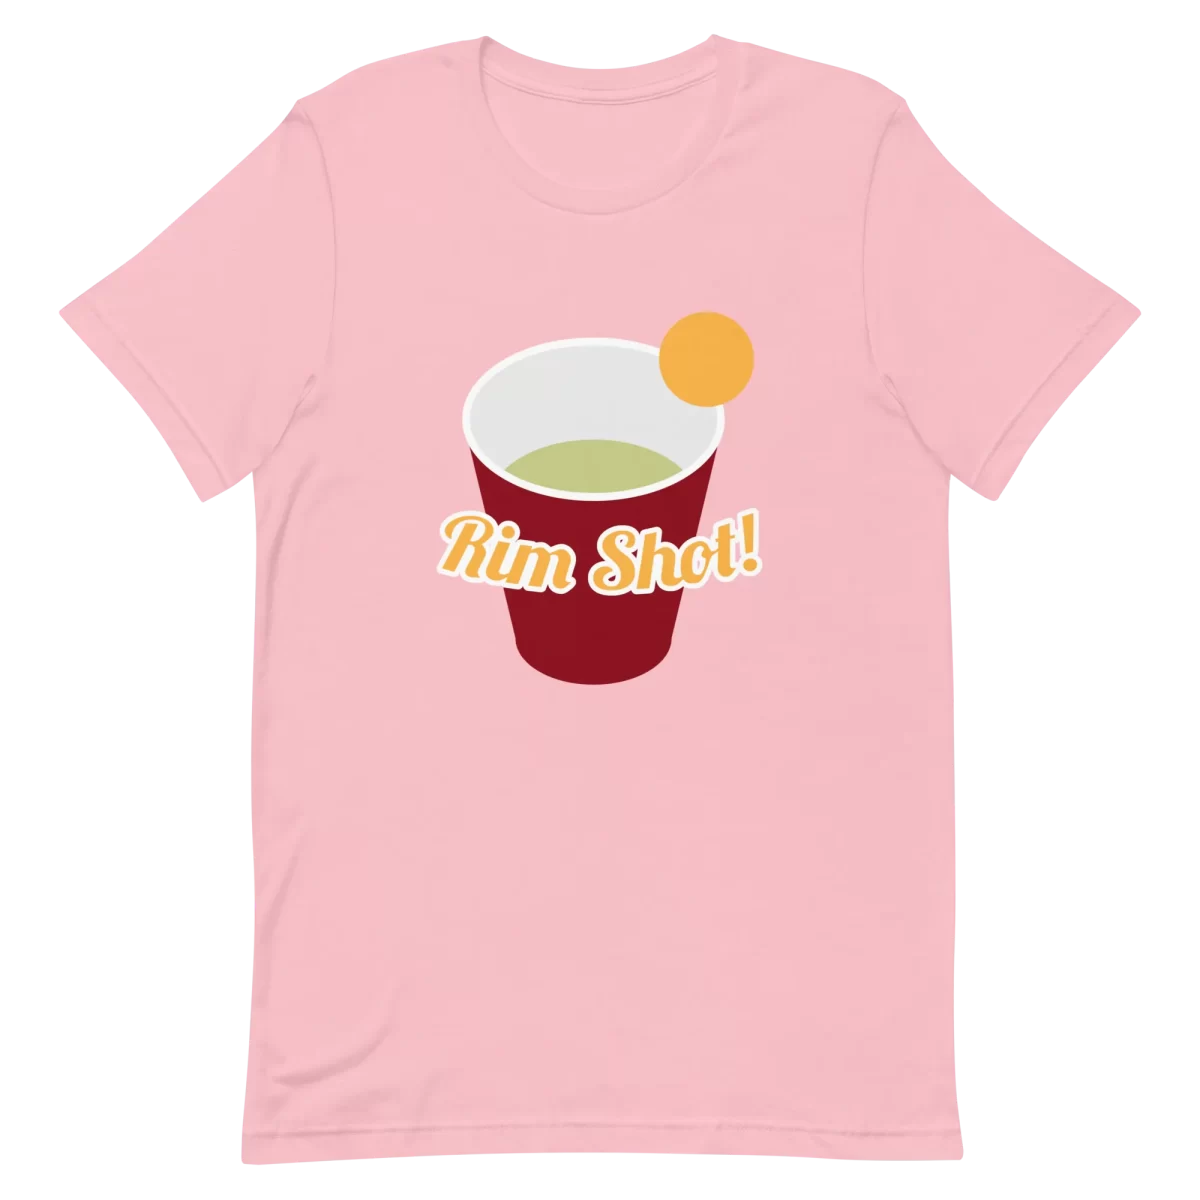 Unisex T-Shirt - Rim Shot! - Pink